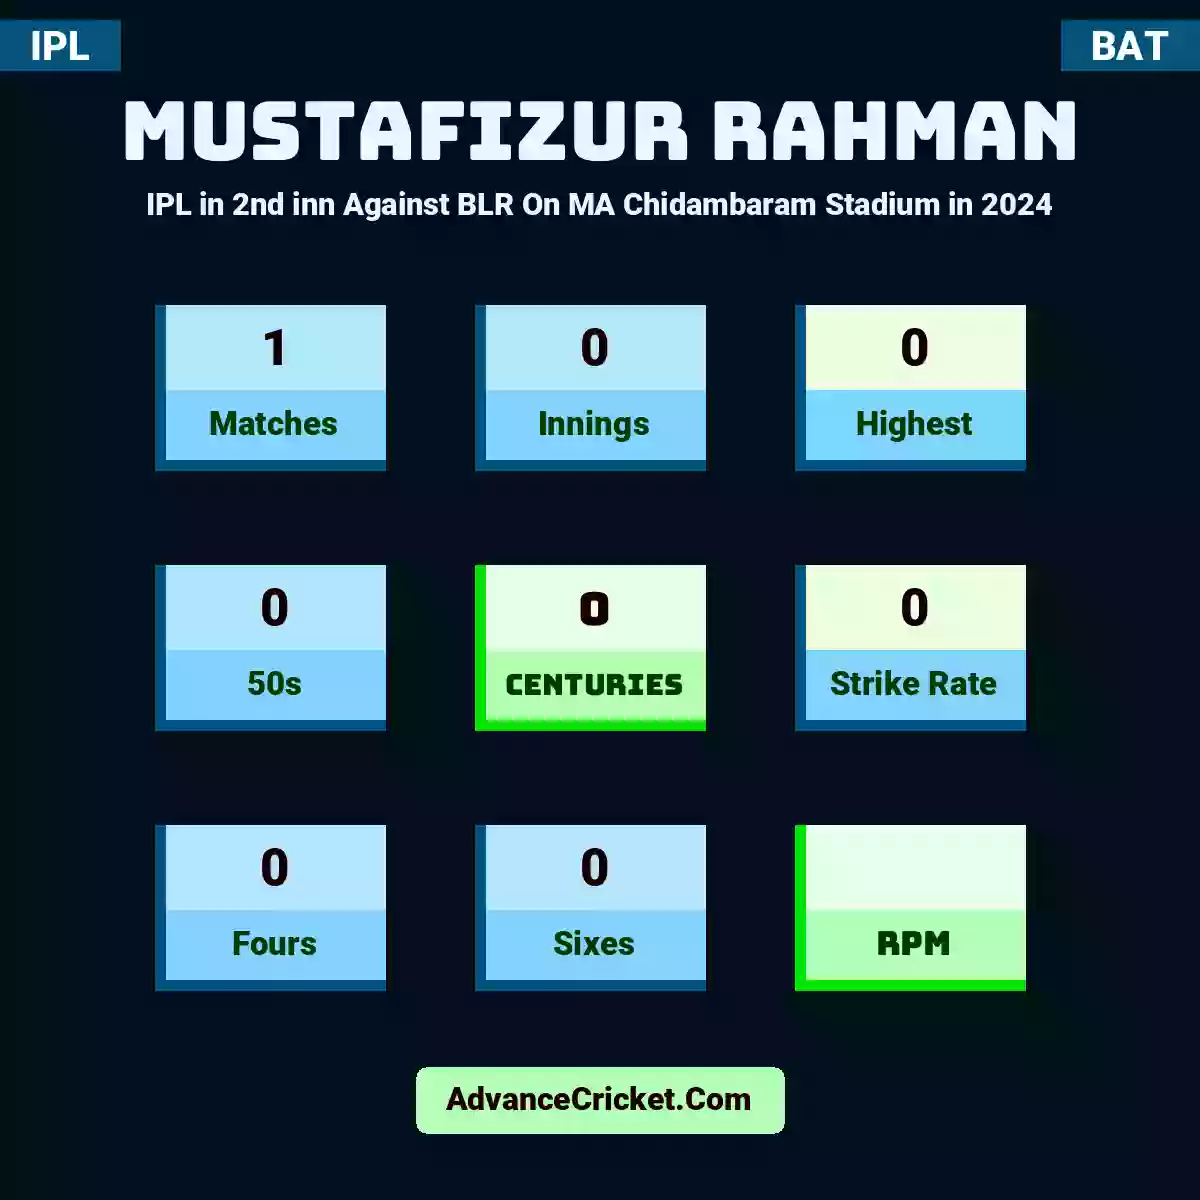 Mustafizur Rahman IPL  in 2nd inn Against BLR On MA Chidambaram Stadium in 2024, Mustafizur Rahman played 1 matches, scored 0 runs as highest, 0 half-centuries, and 0 centuries, with a strike rate of 0. M.Rahman hit 0 fours and 0 sixes.